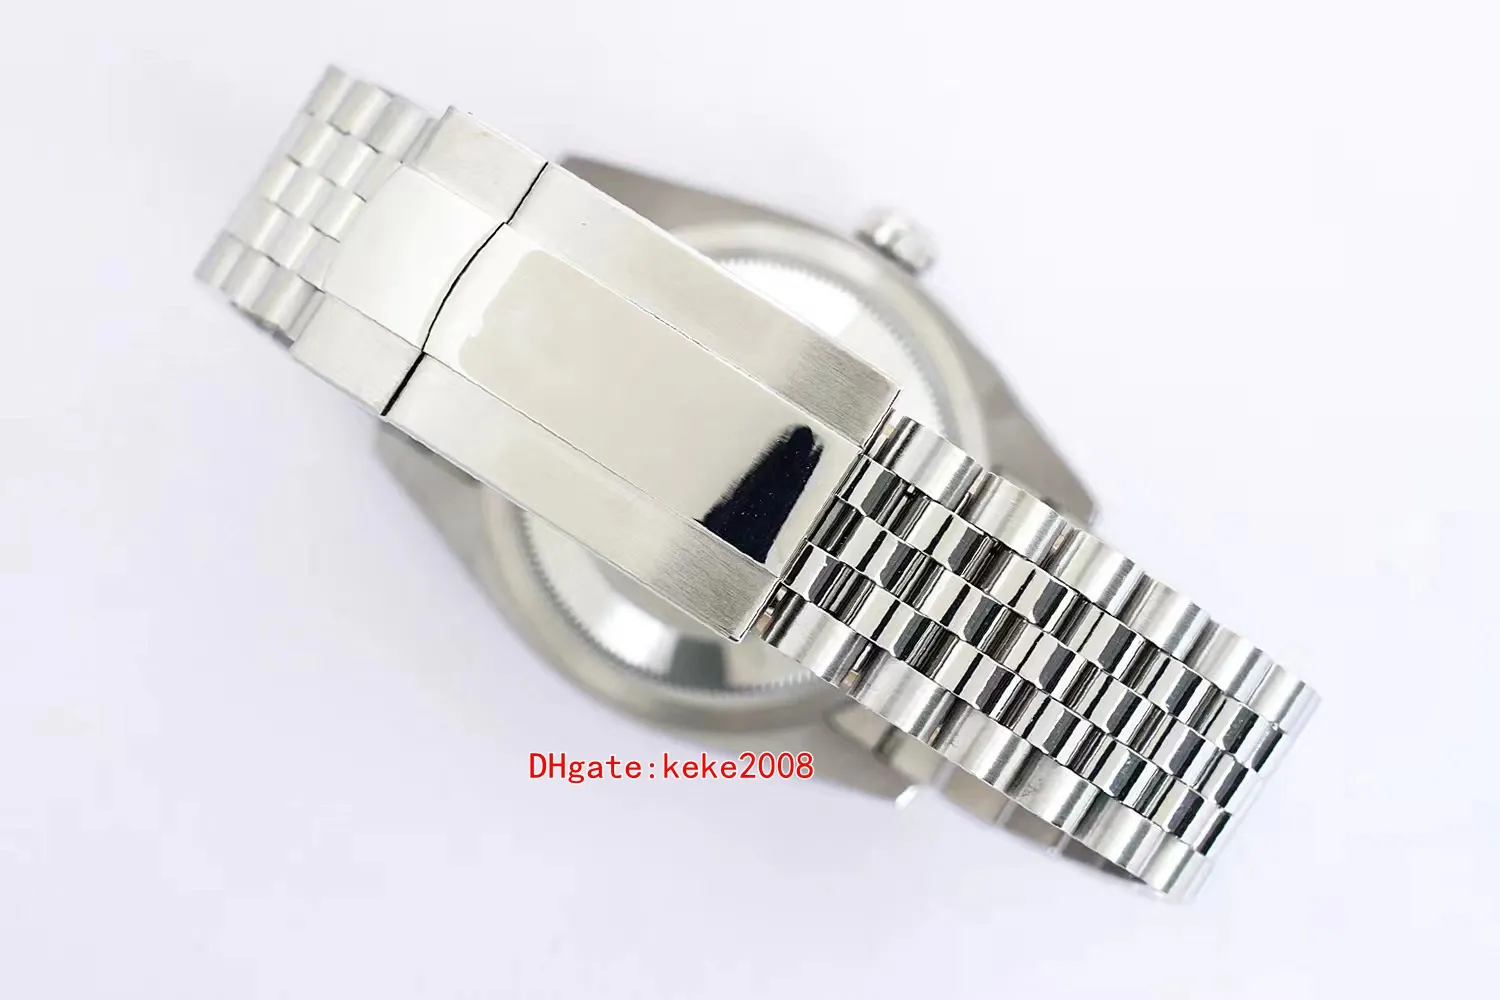 Top EW Men Wrist-Wrist Wistres Watches 36mm 126234 Inoxydable 904L Black Silver Dow